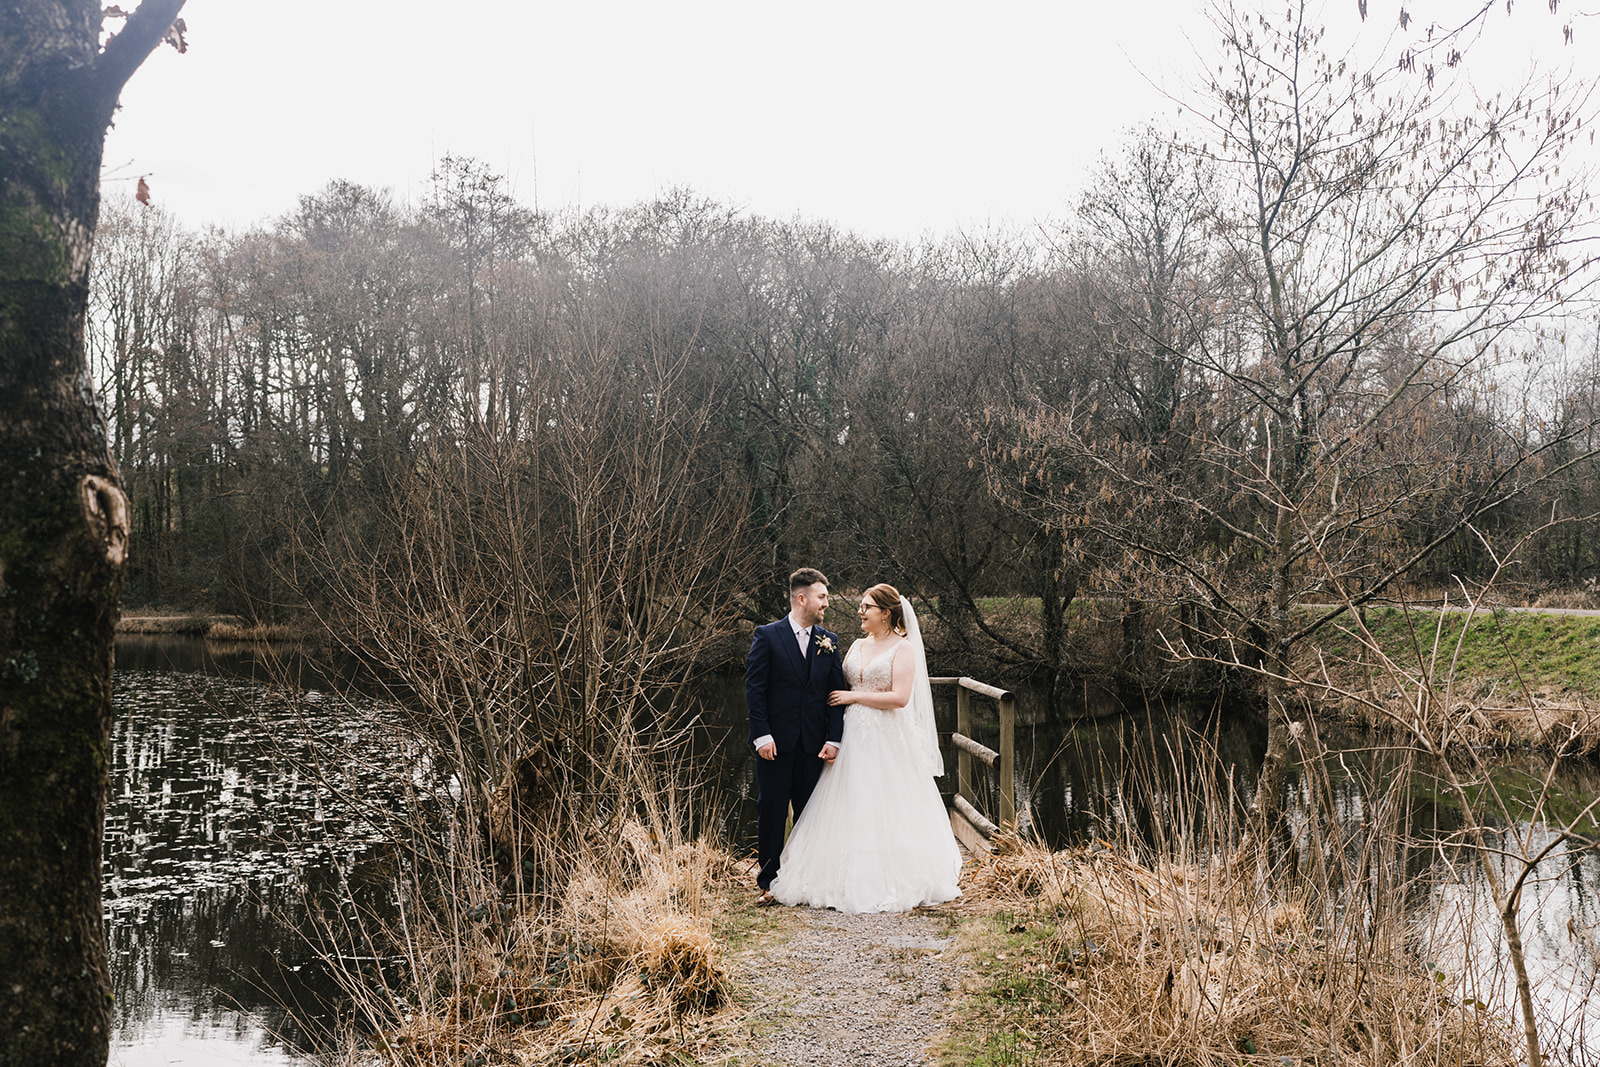 Wedding couple photos by the lake at Llanerch Vineyard